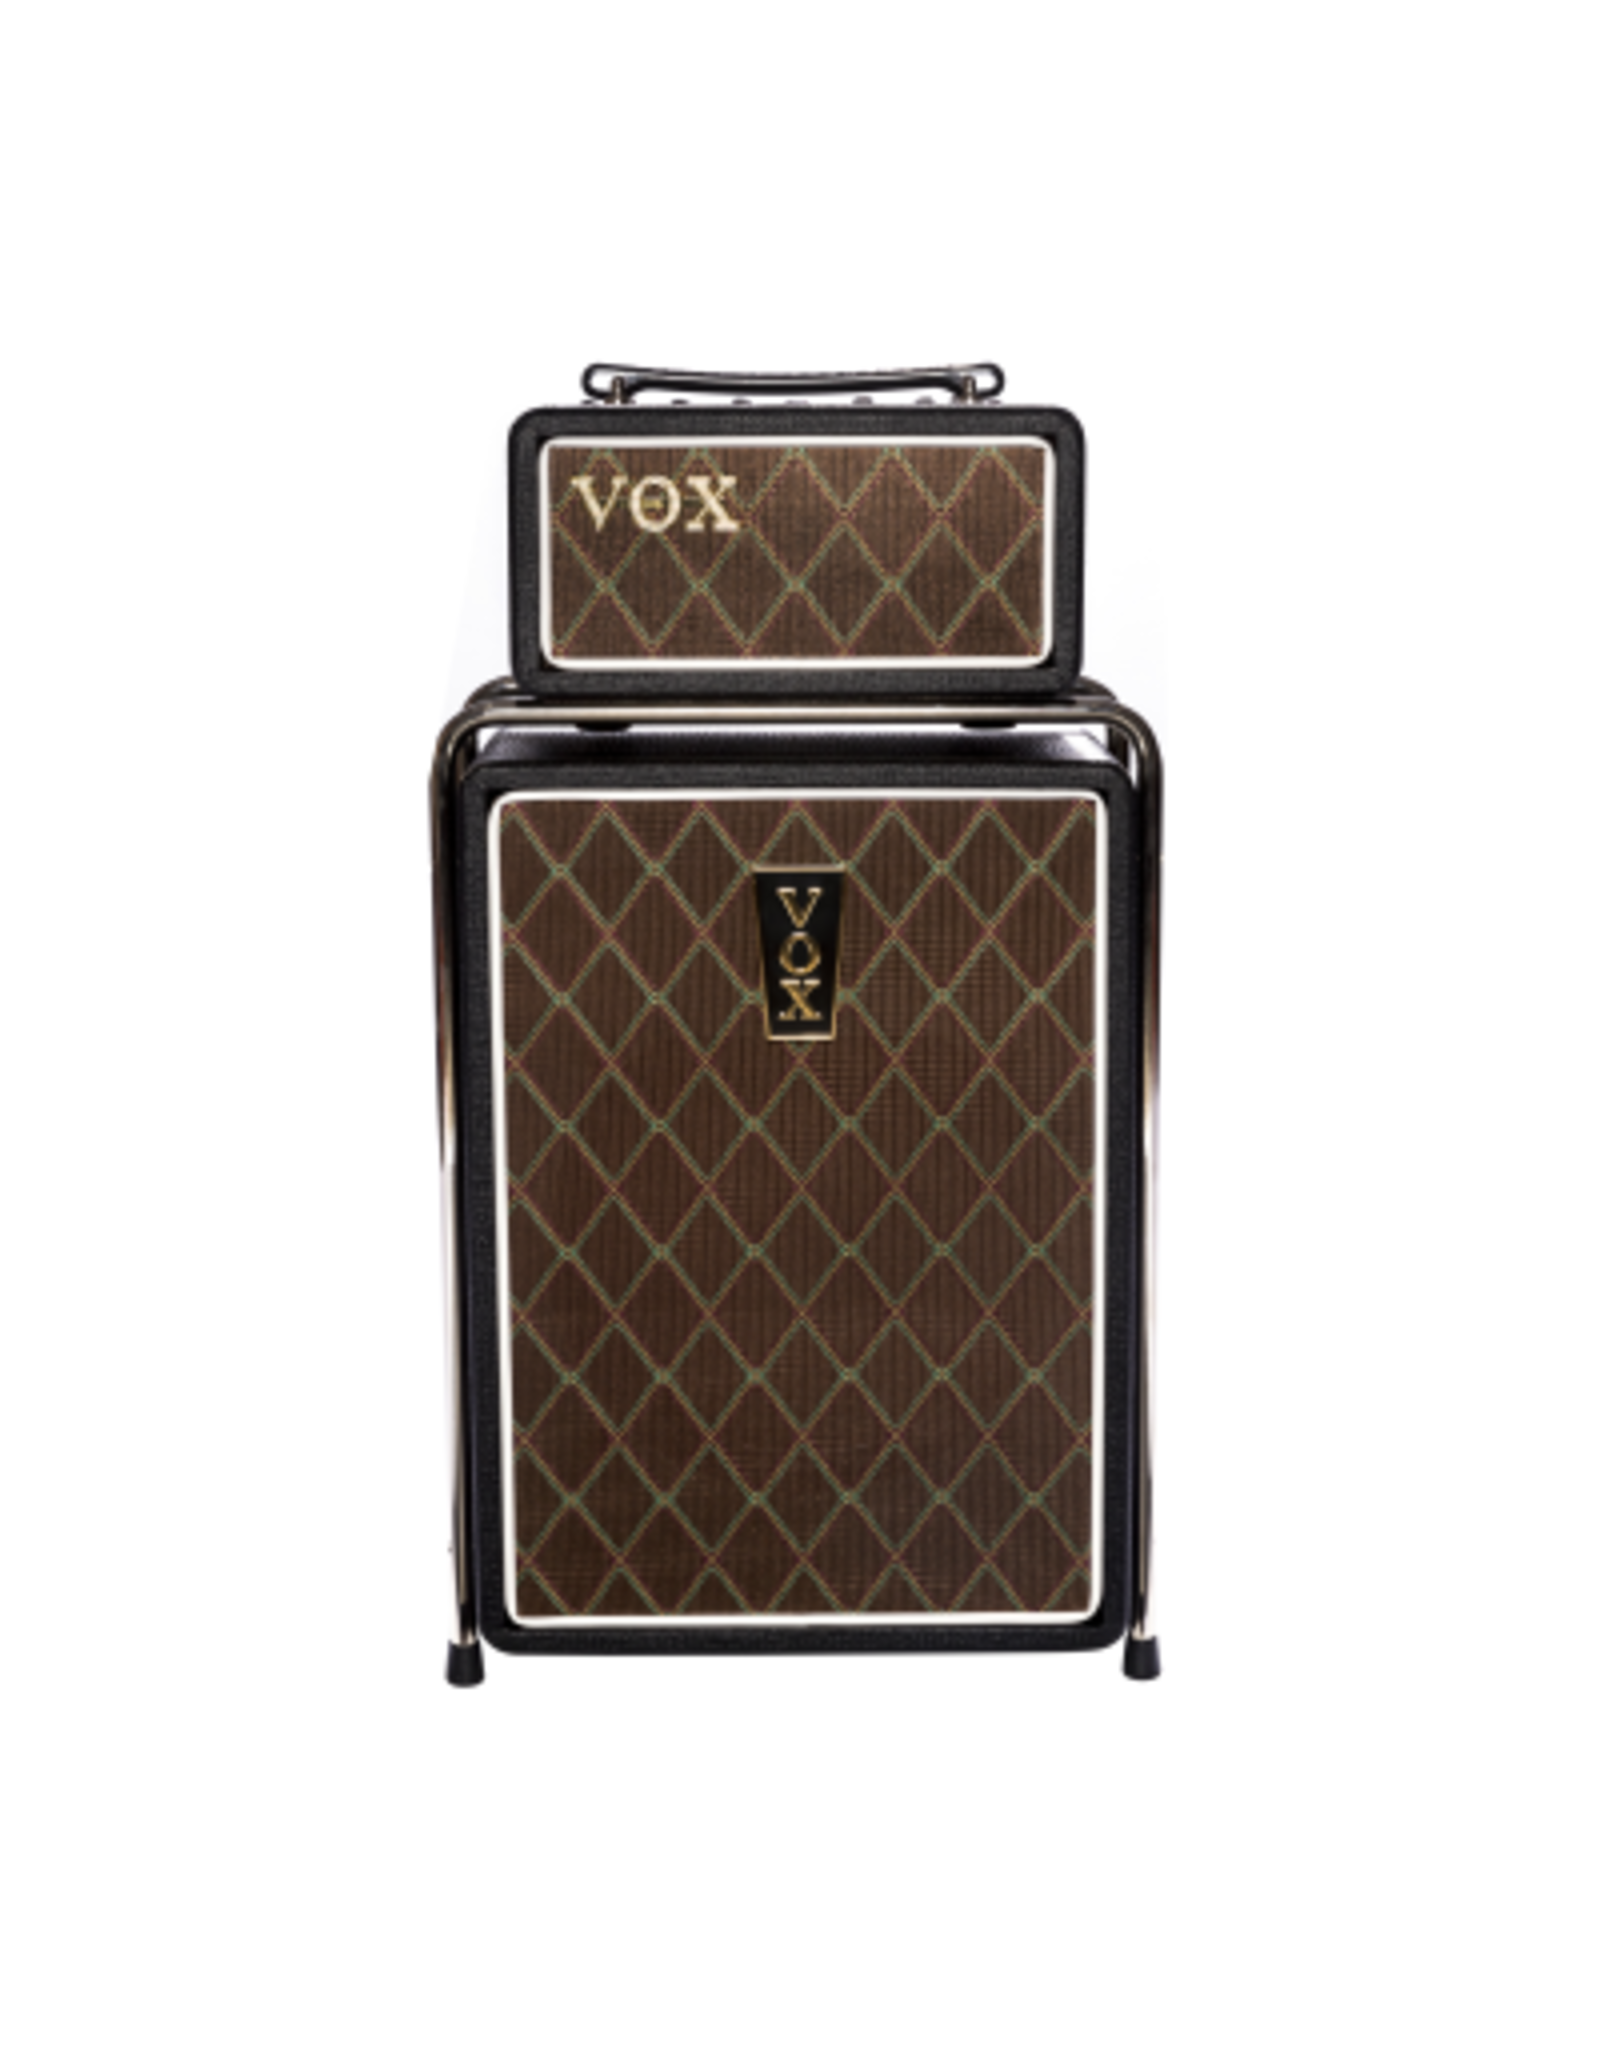 Vox Vox Mini Superbeetle Guitar Head and Cab